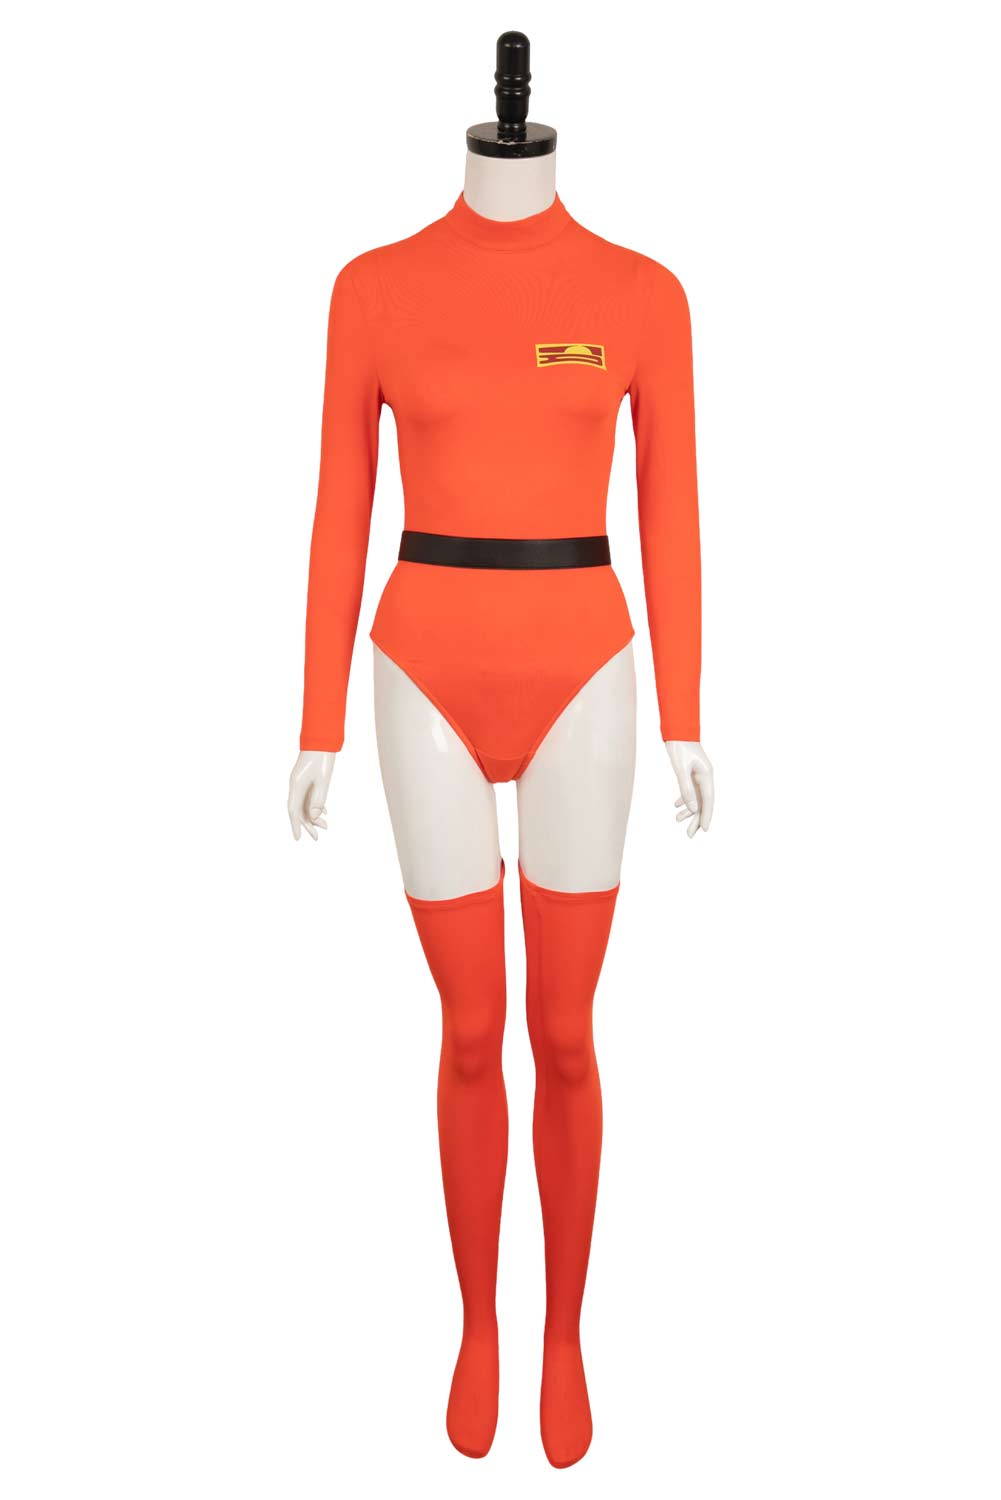 Splatoon - Callie Cosplay Costume Jumpsuit Outfits Halloween Carnival –